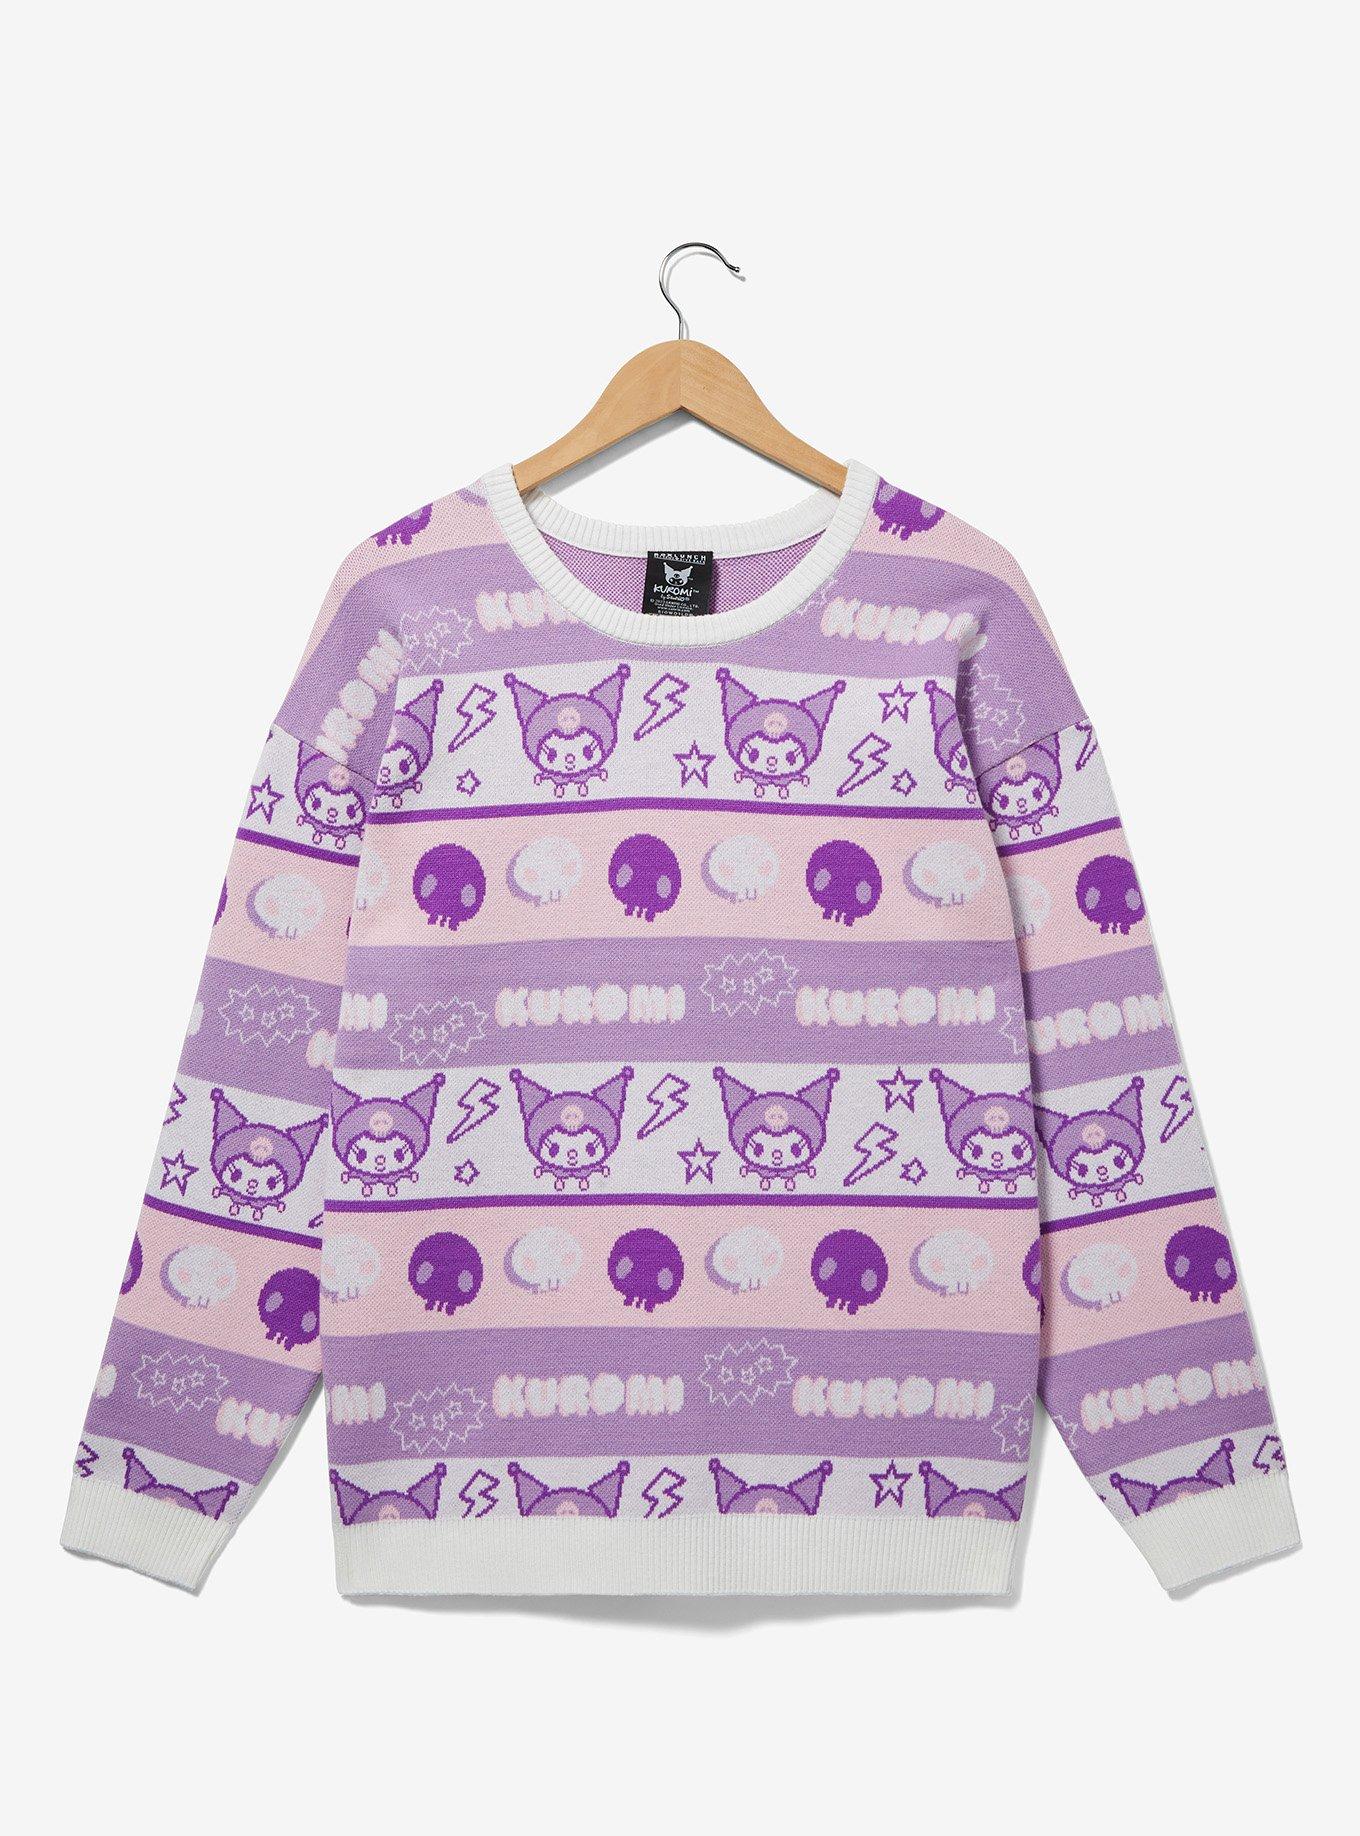 Sanrio Kuromi Women's Holiday Sweater - BoxLunch Exclusive, PURPLE, hi-res